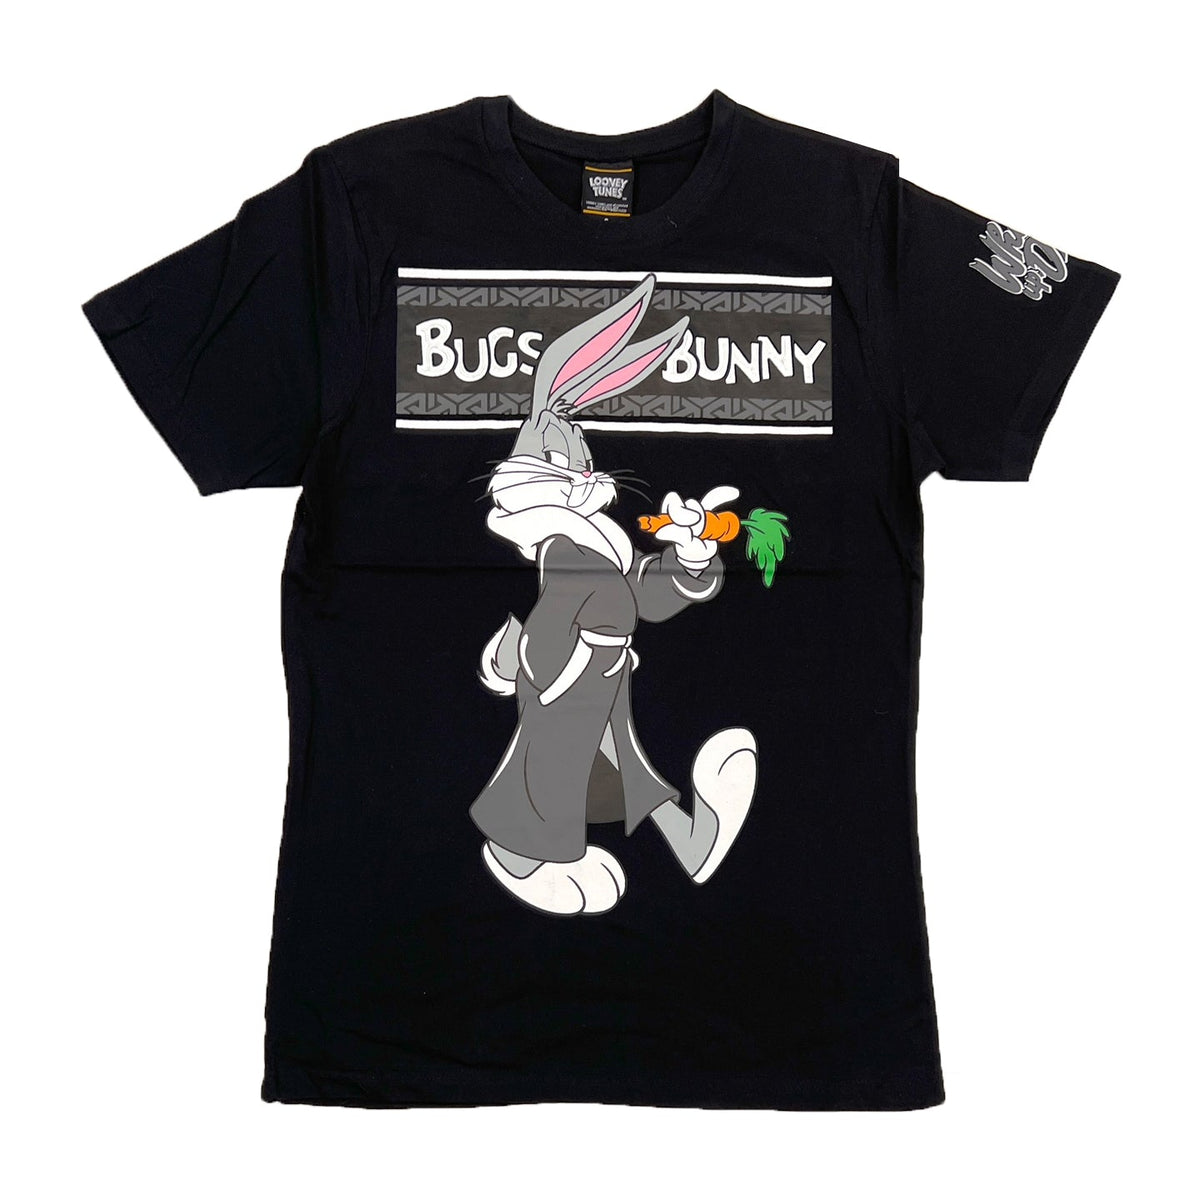 Looney / Bunny Bugs Tee (Black) Tunes $30 2 $16.99 for